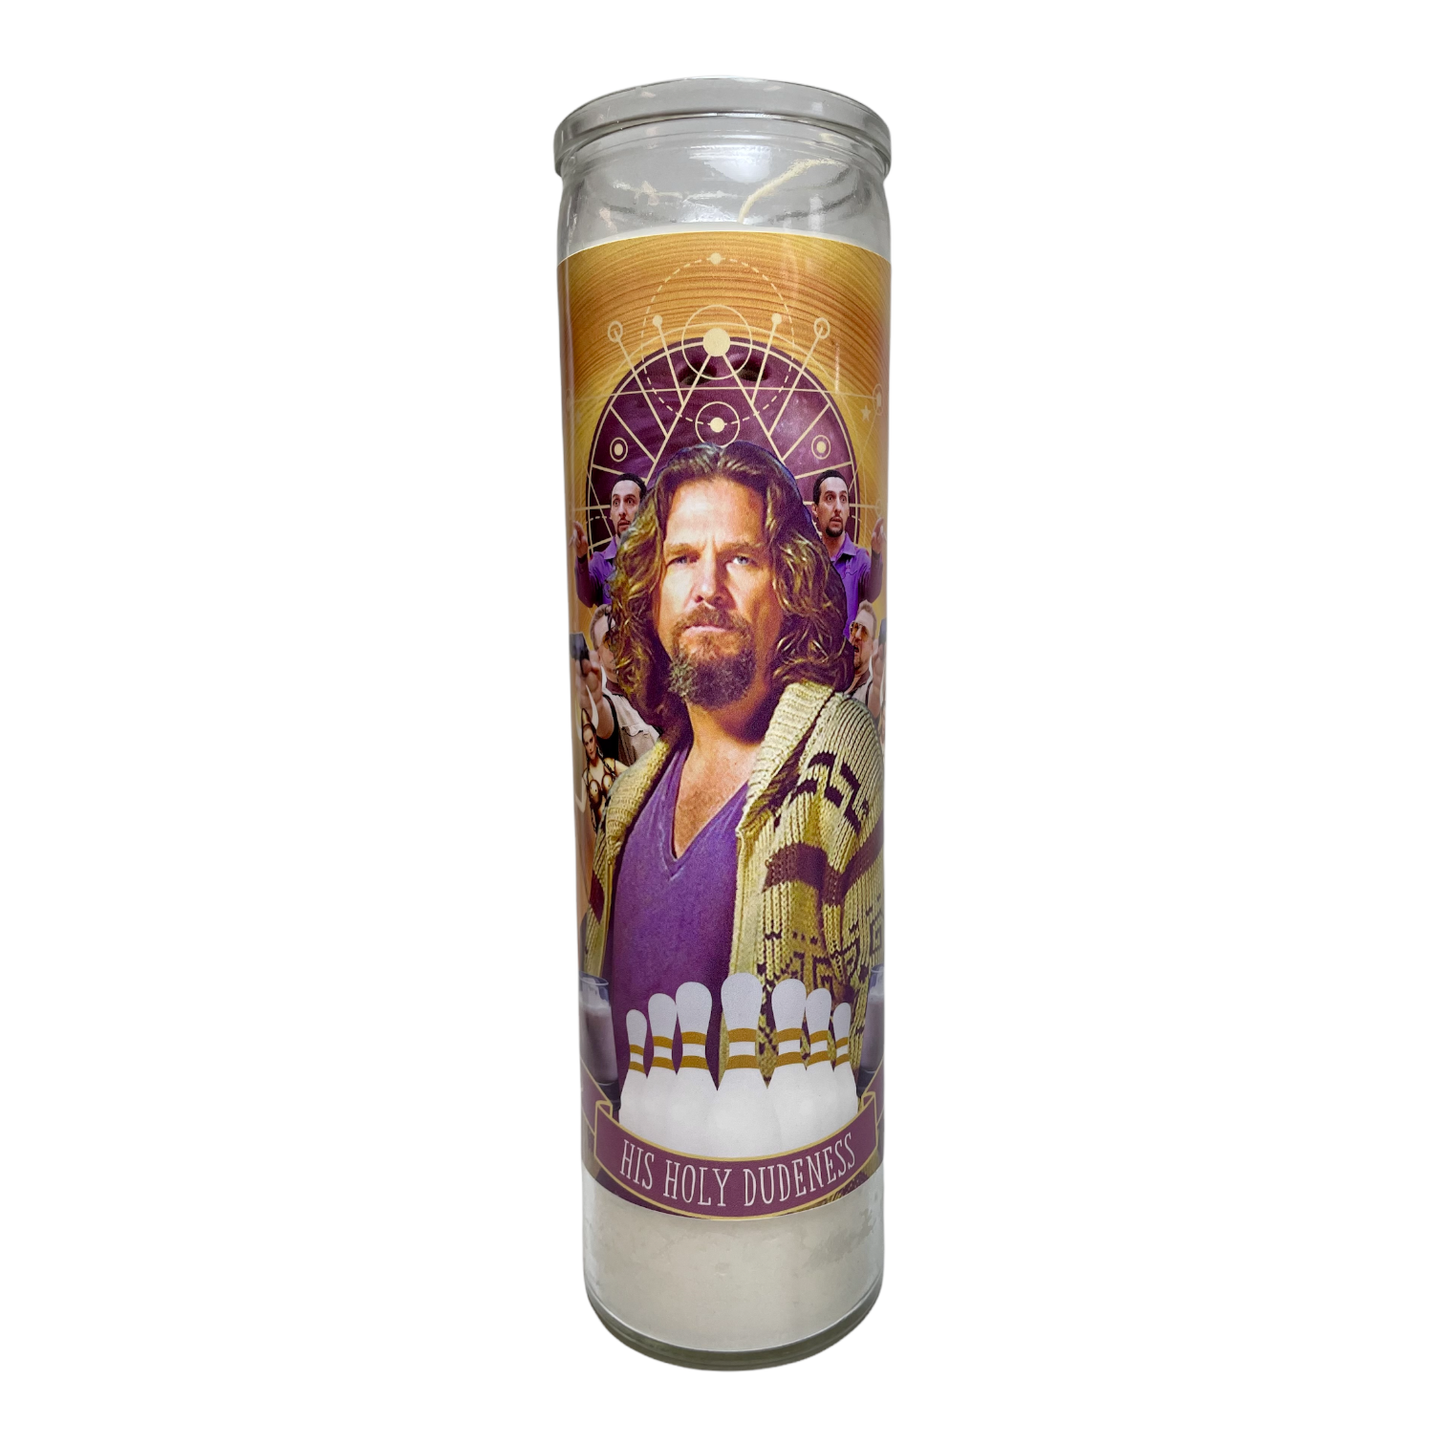 The Luminary Big Lebowski Altar Candle